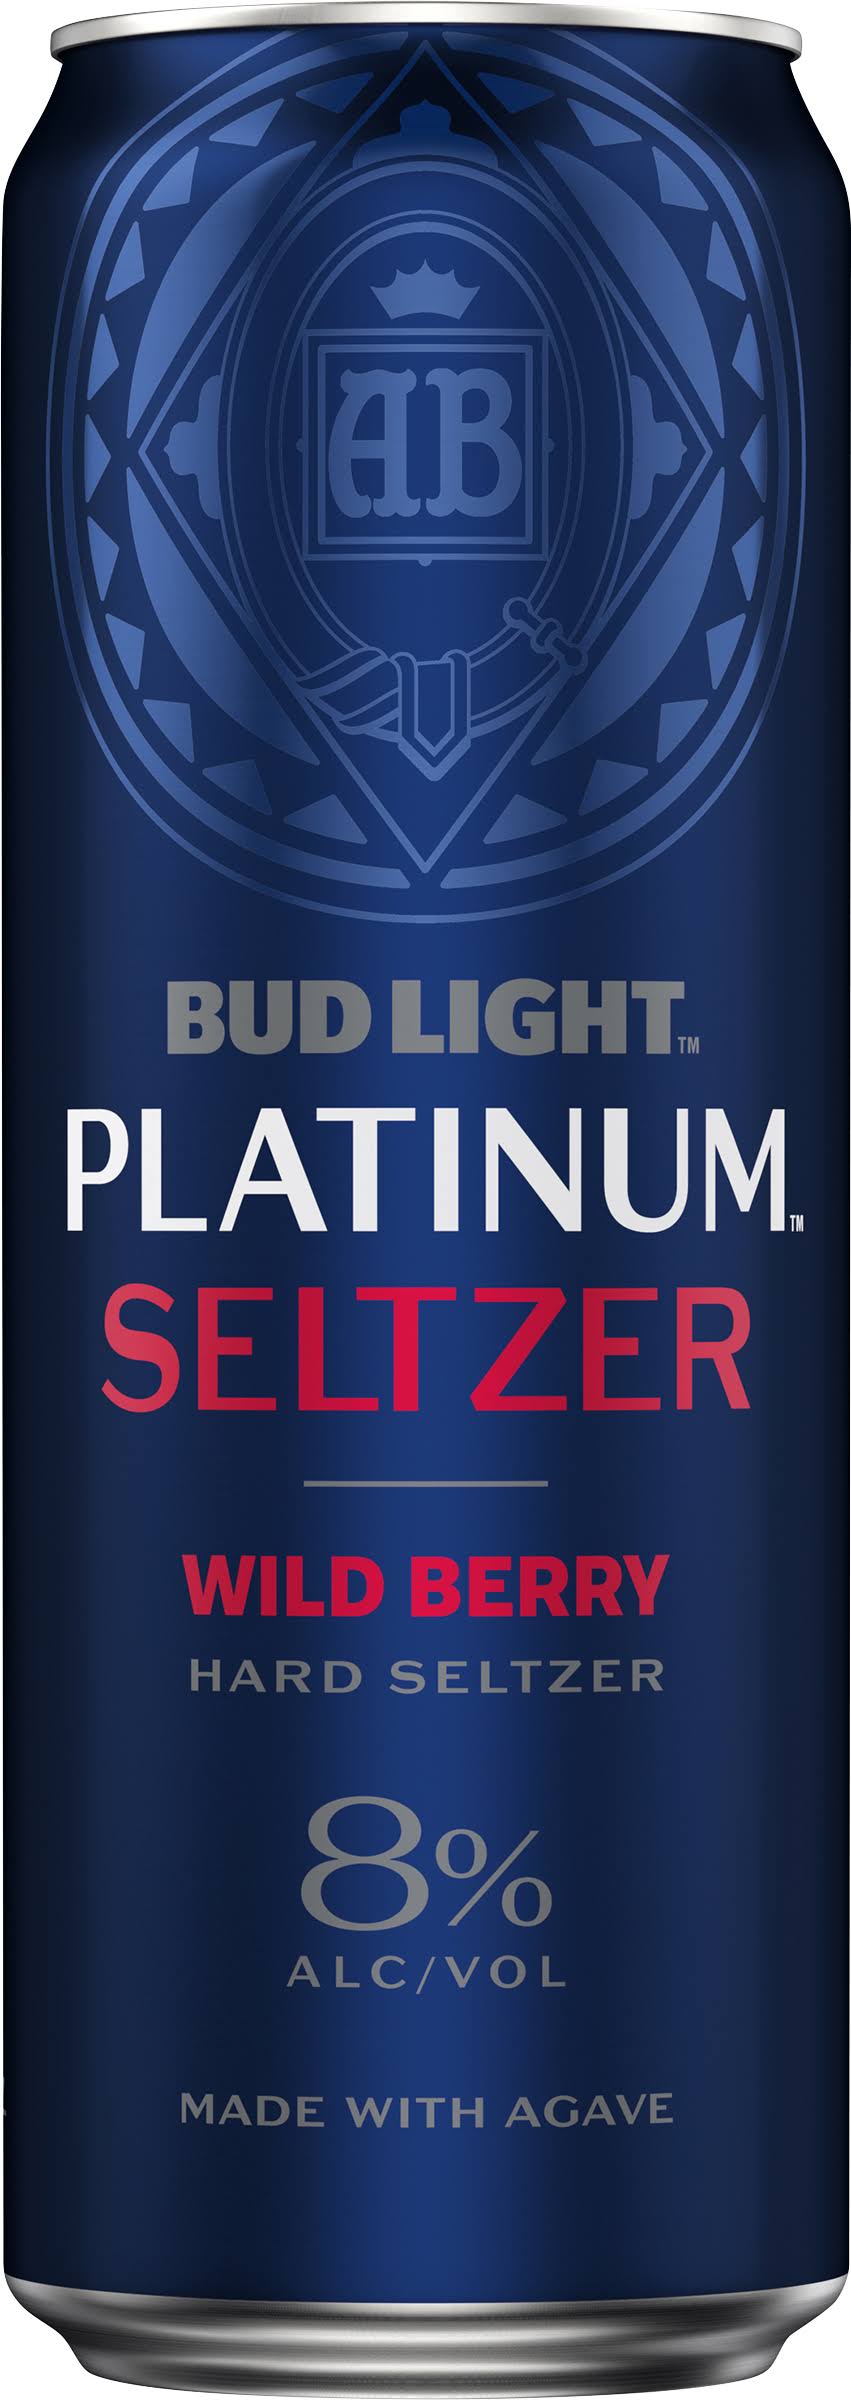 Bud Light Platinum Seltzer Hard Seltzer, Wild Berry - 25 fl oz